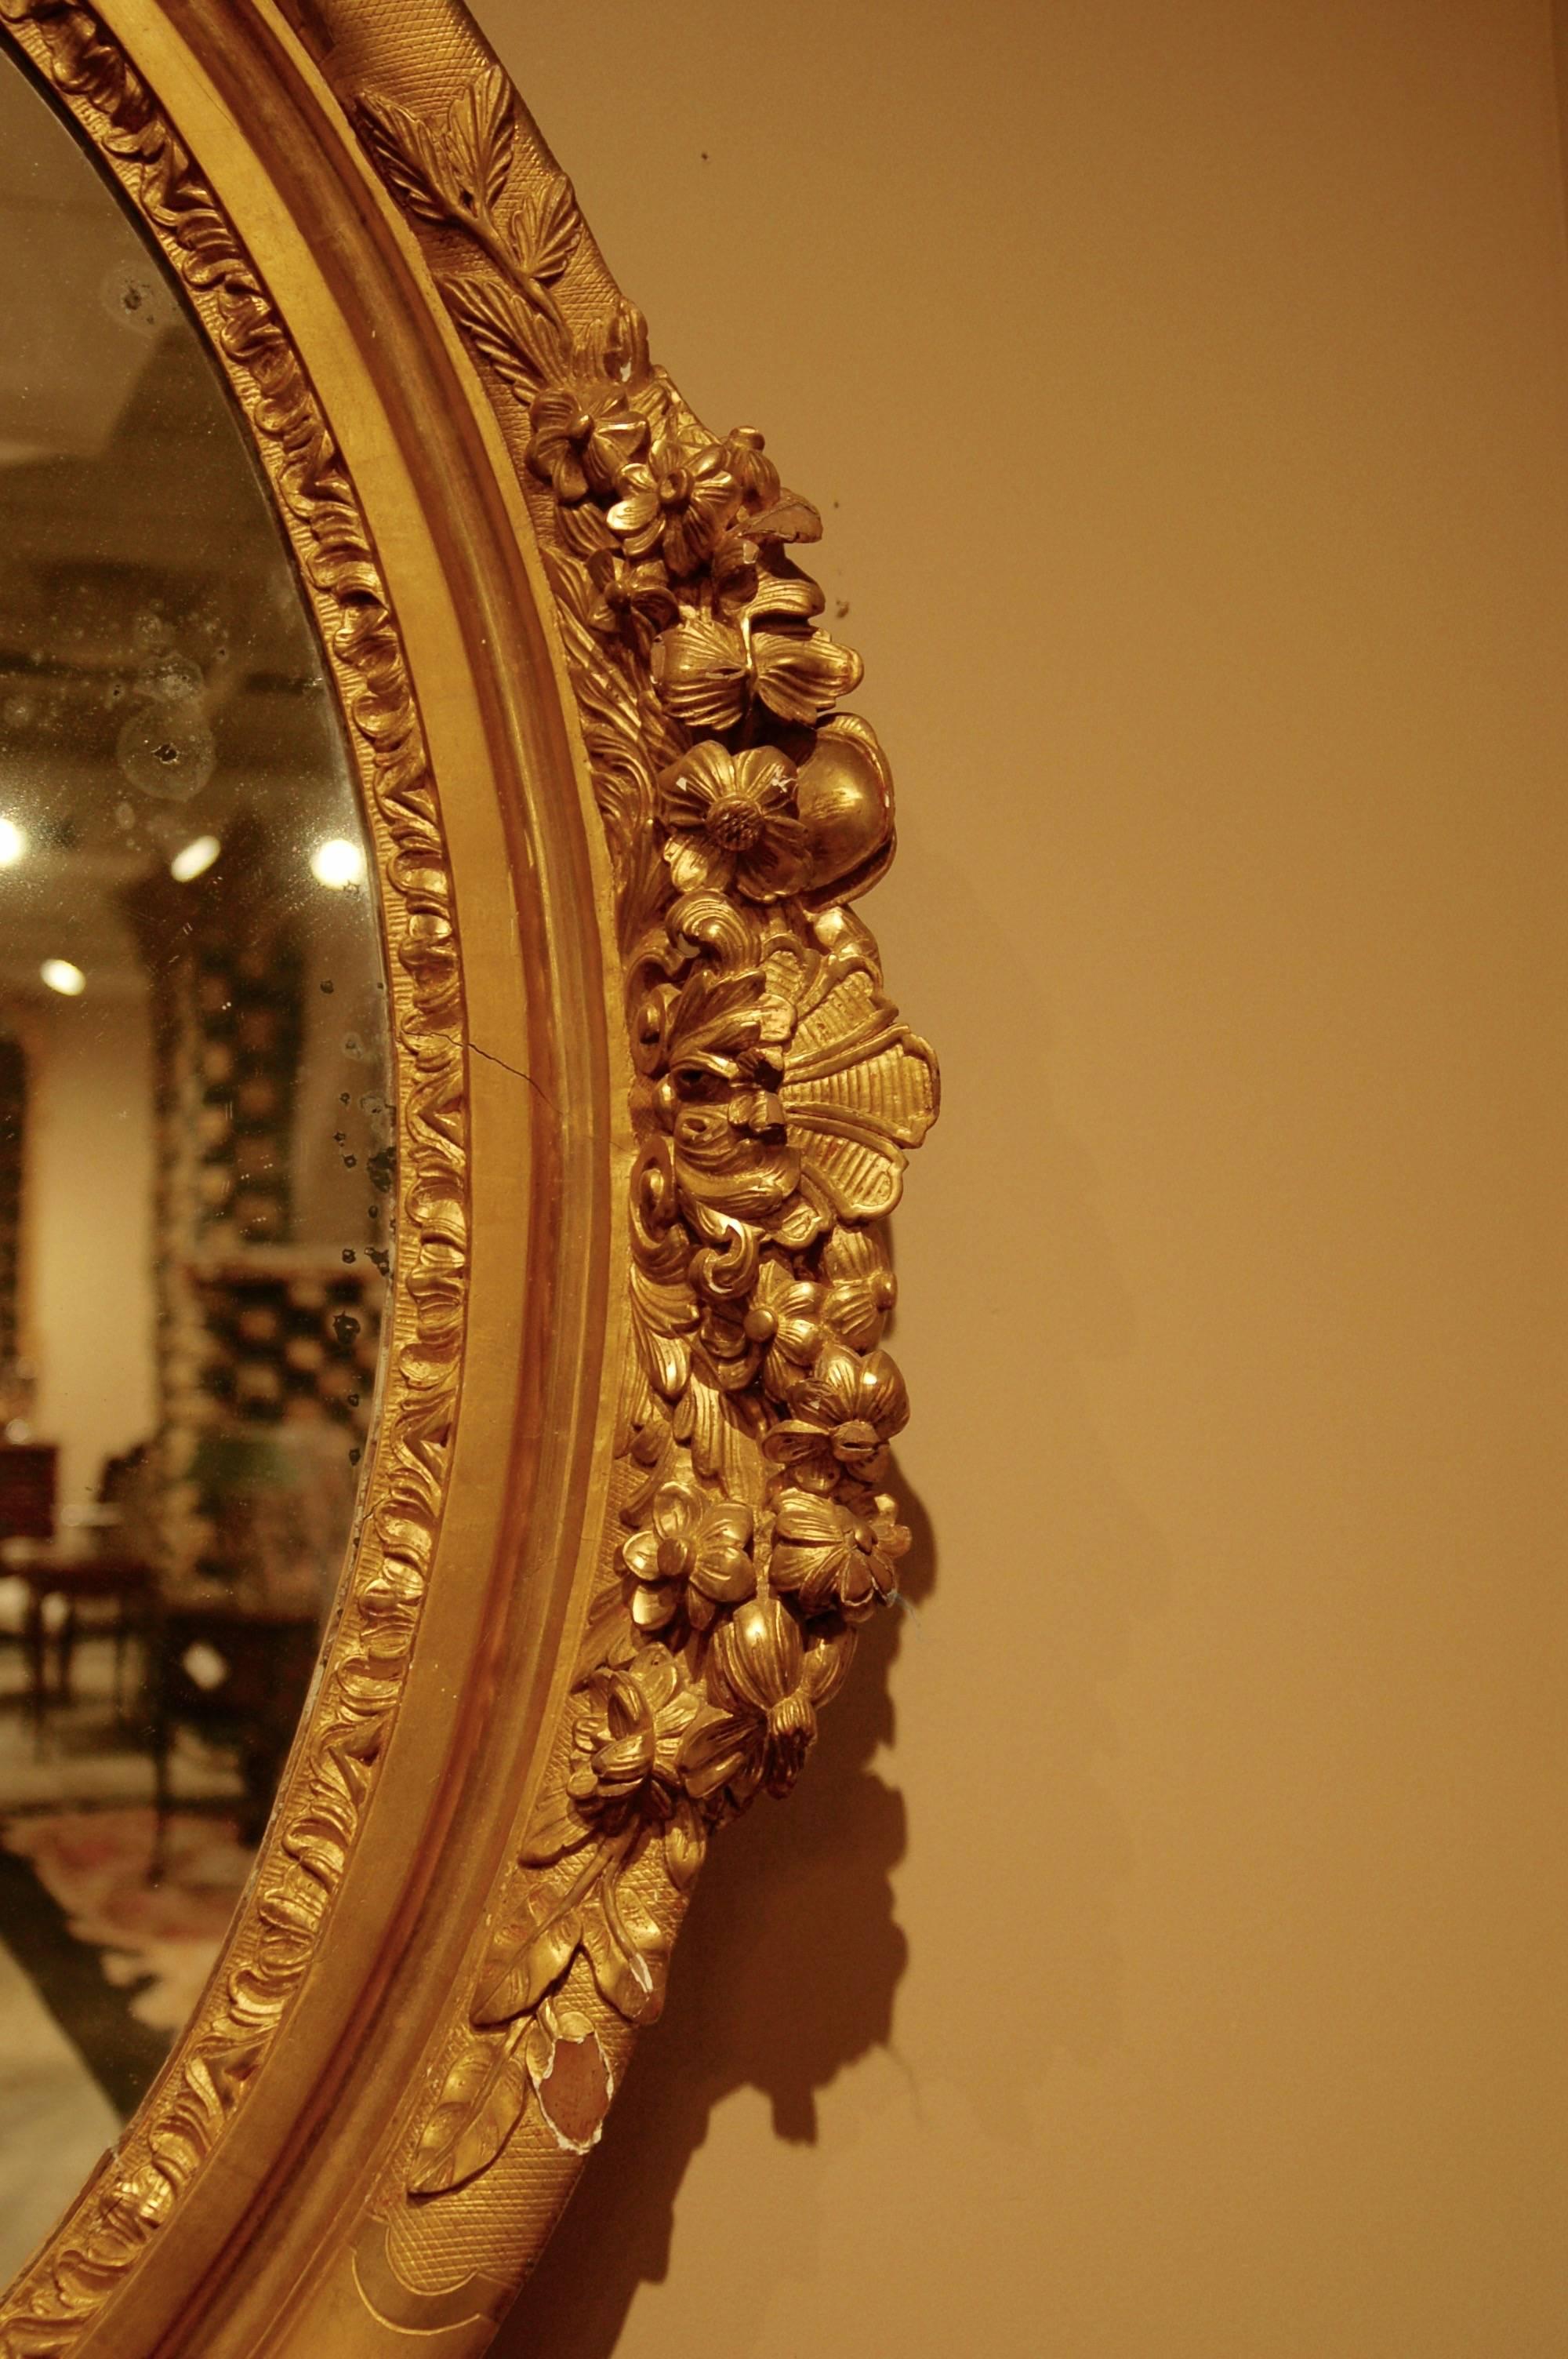 19th Century Oval Gilt Mirror